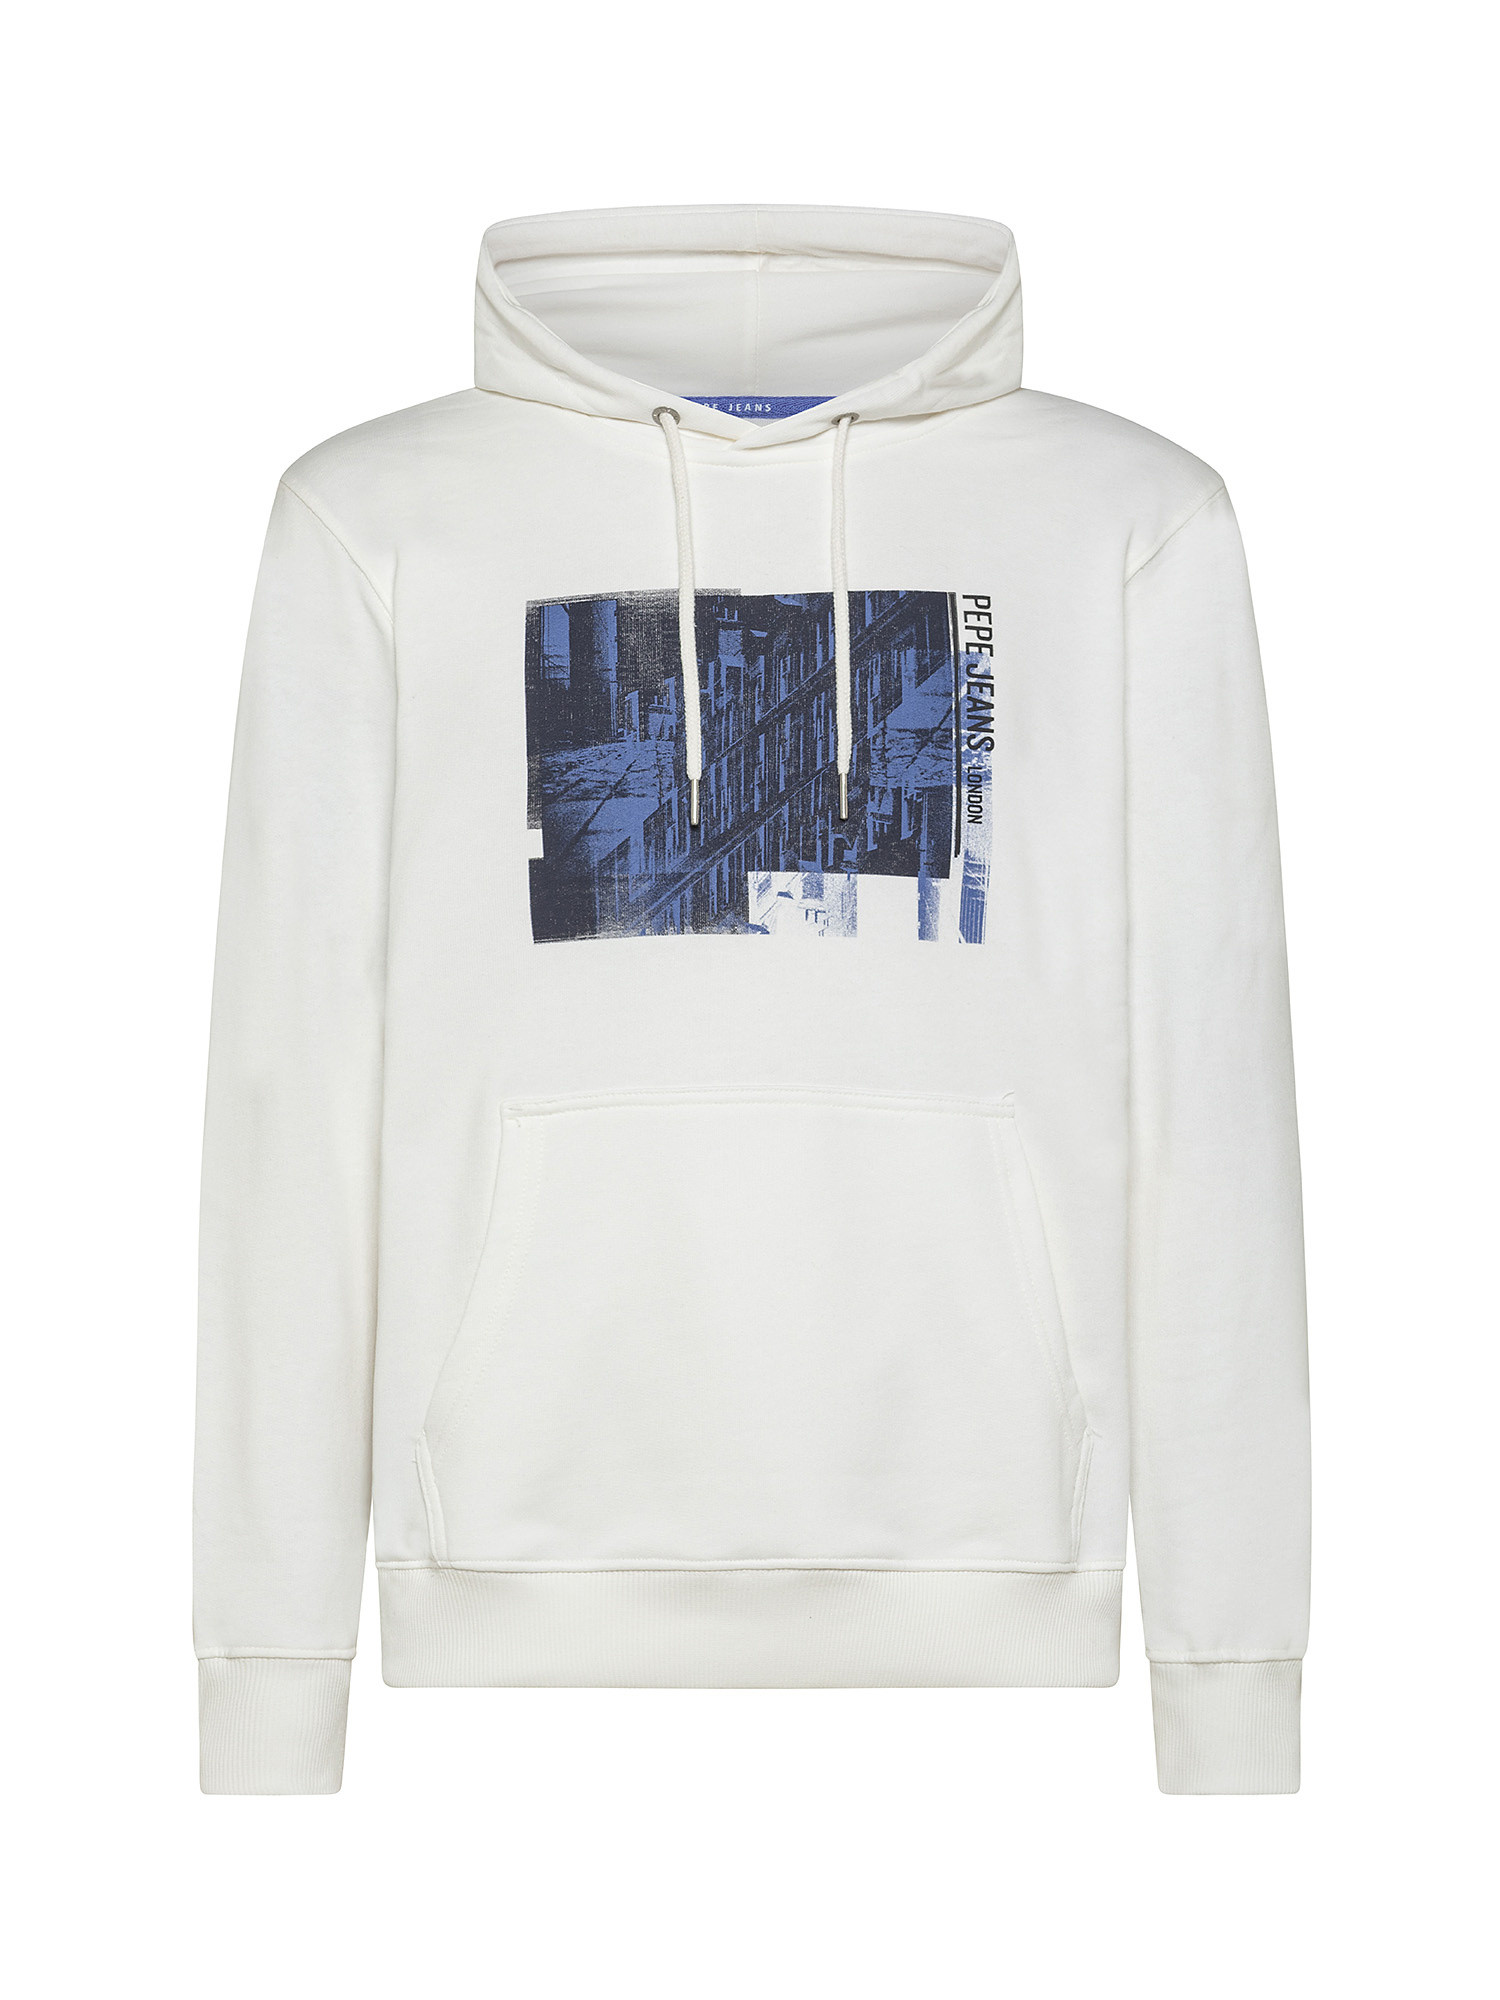 Sweatshirt with print, White, large image number 0